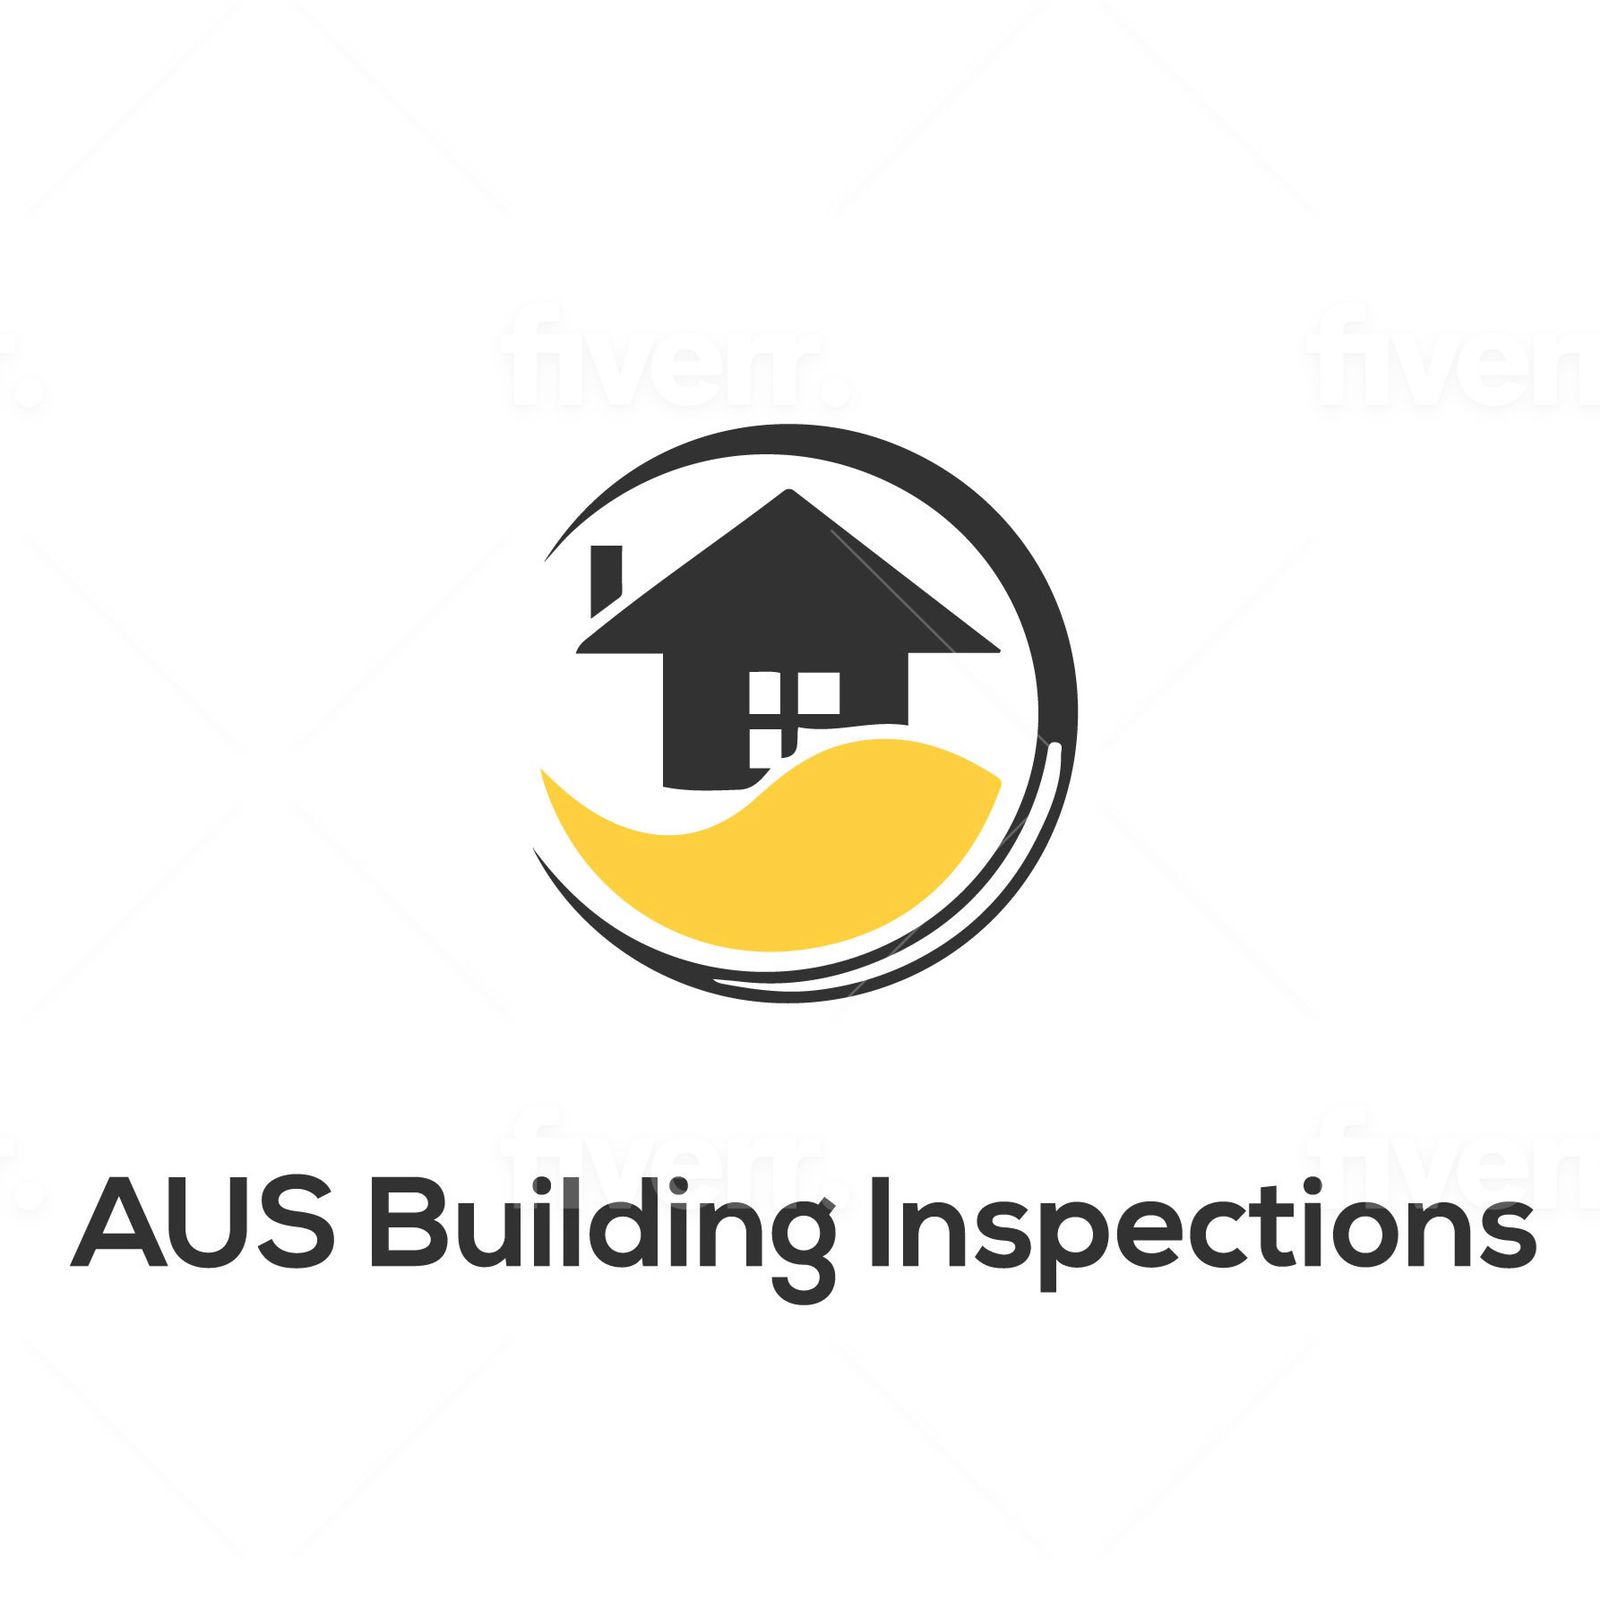 (c) Ausbuildinginspections.com.au